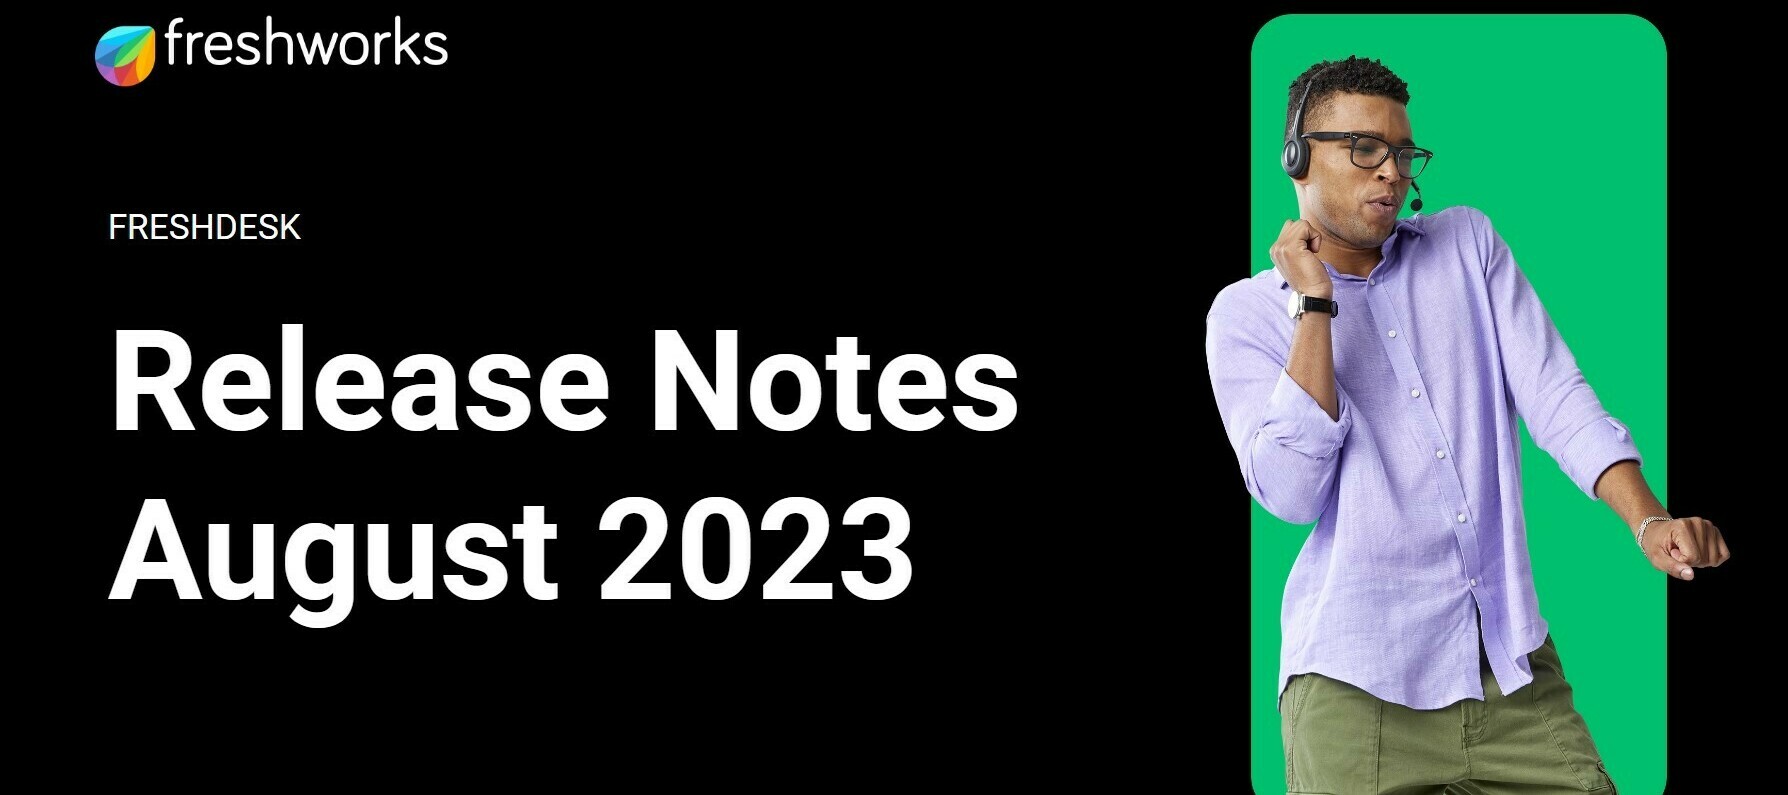 Freshdesk Release Notes - August 2023